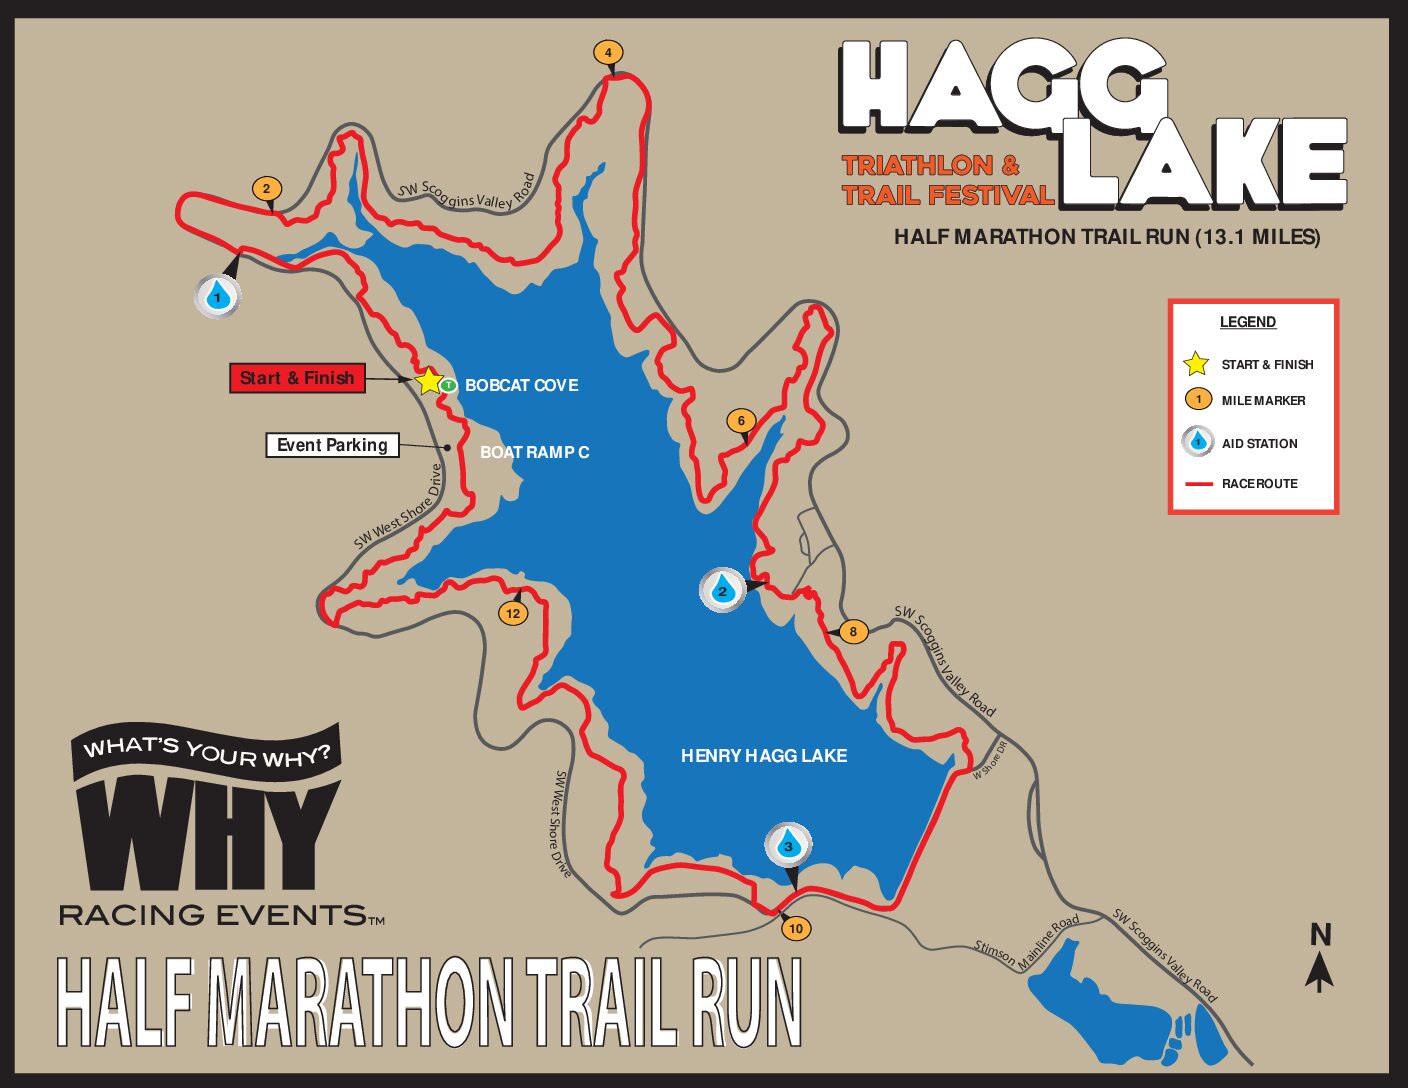 Course Details Hagg Lake Triathlon & Trail Festival